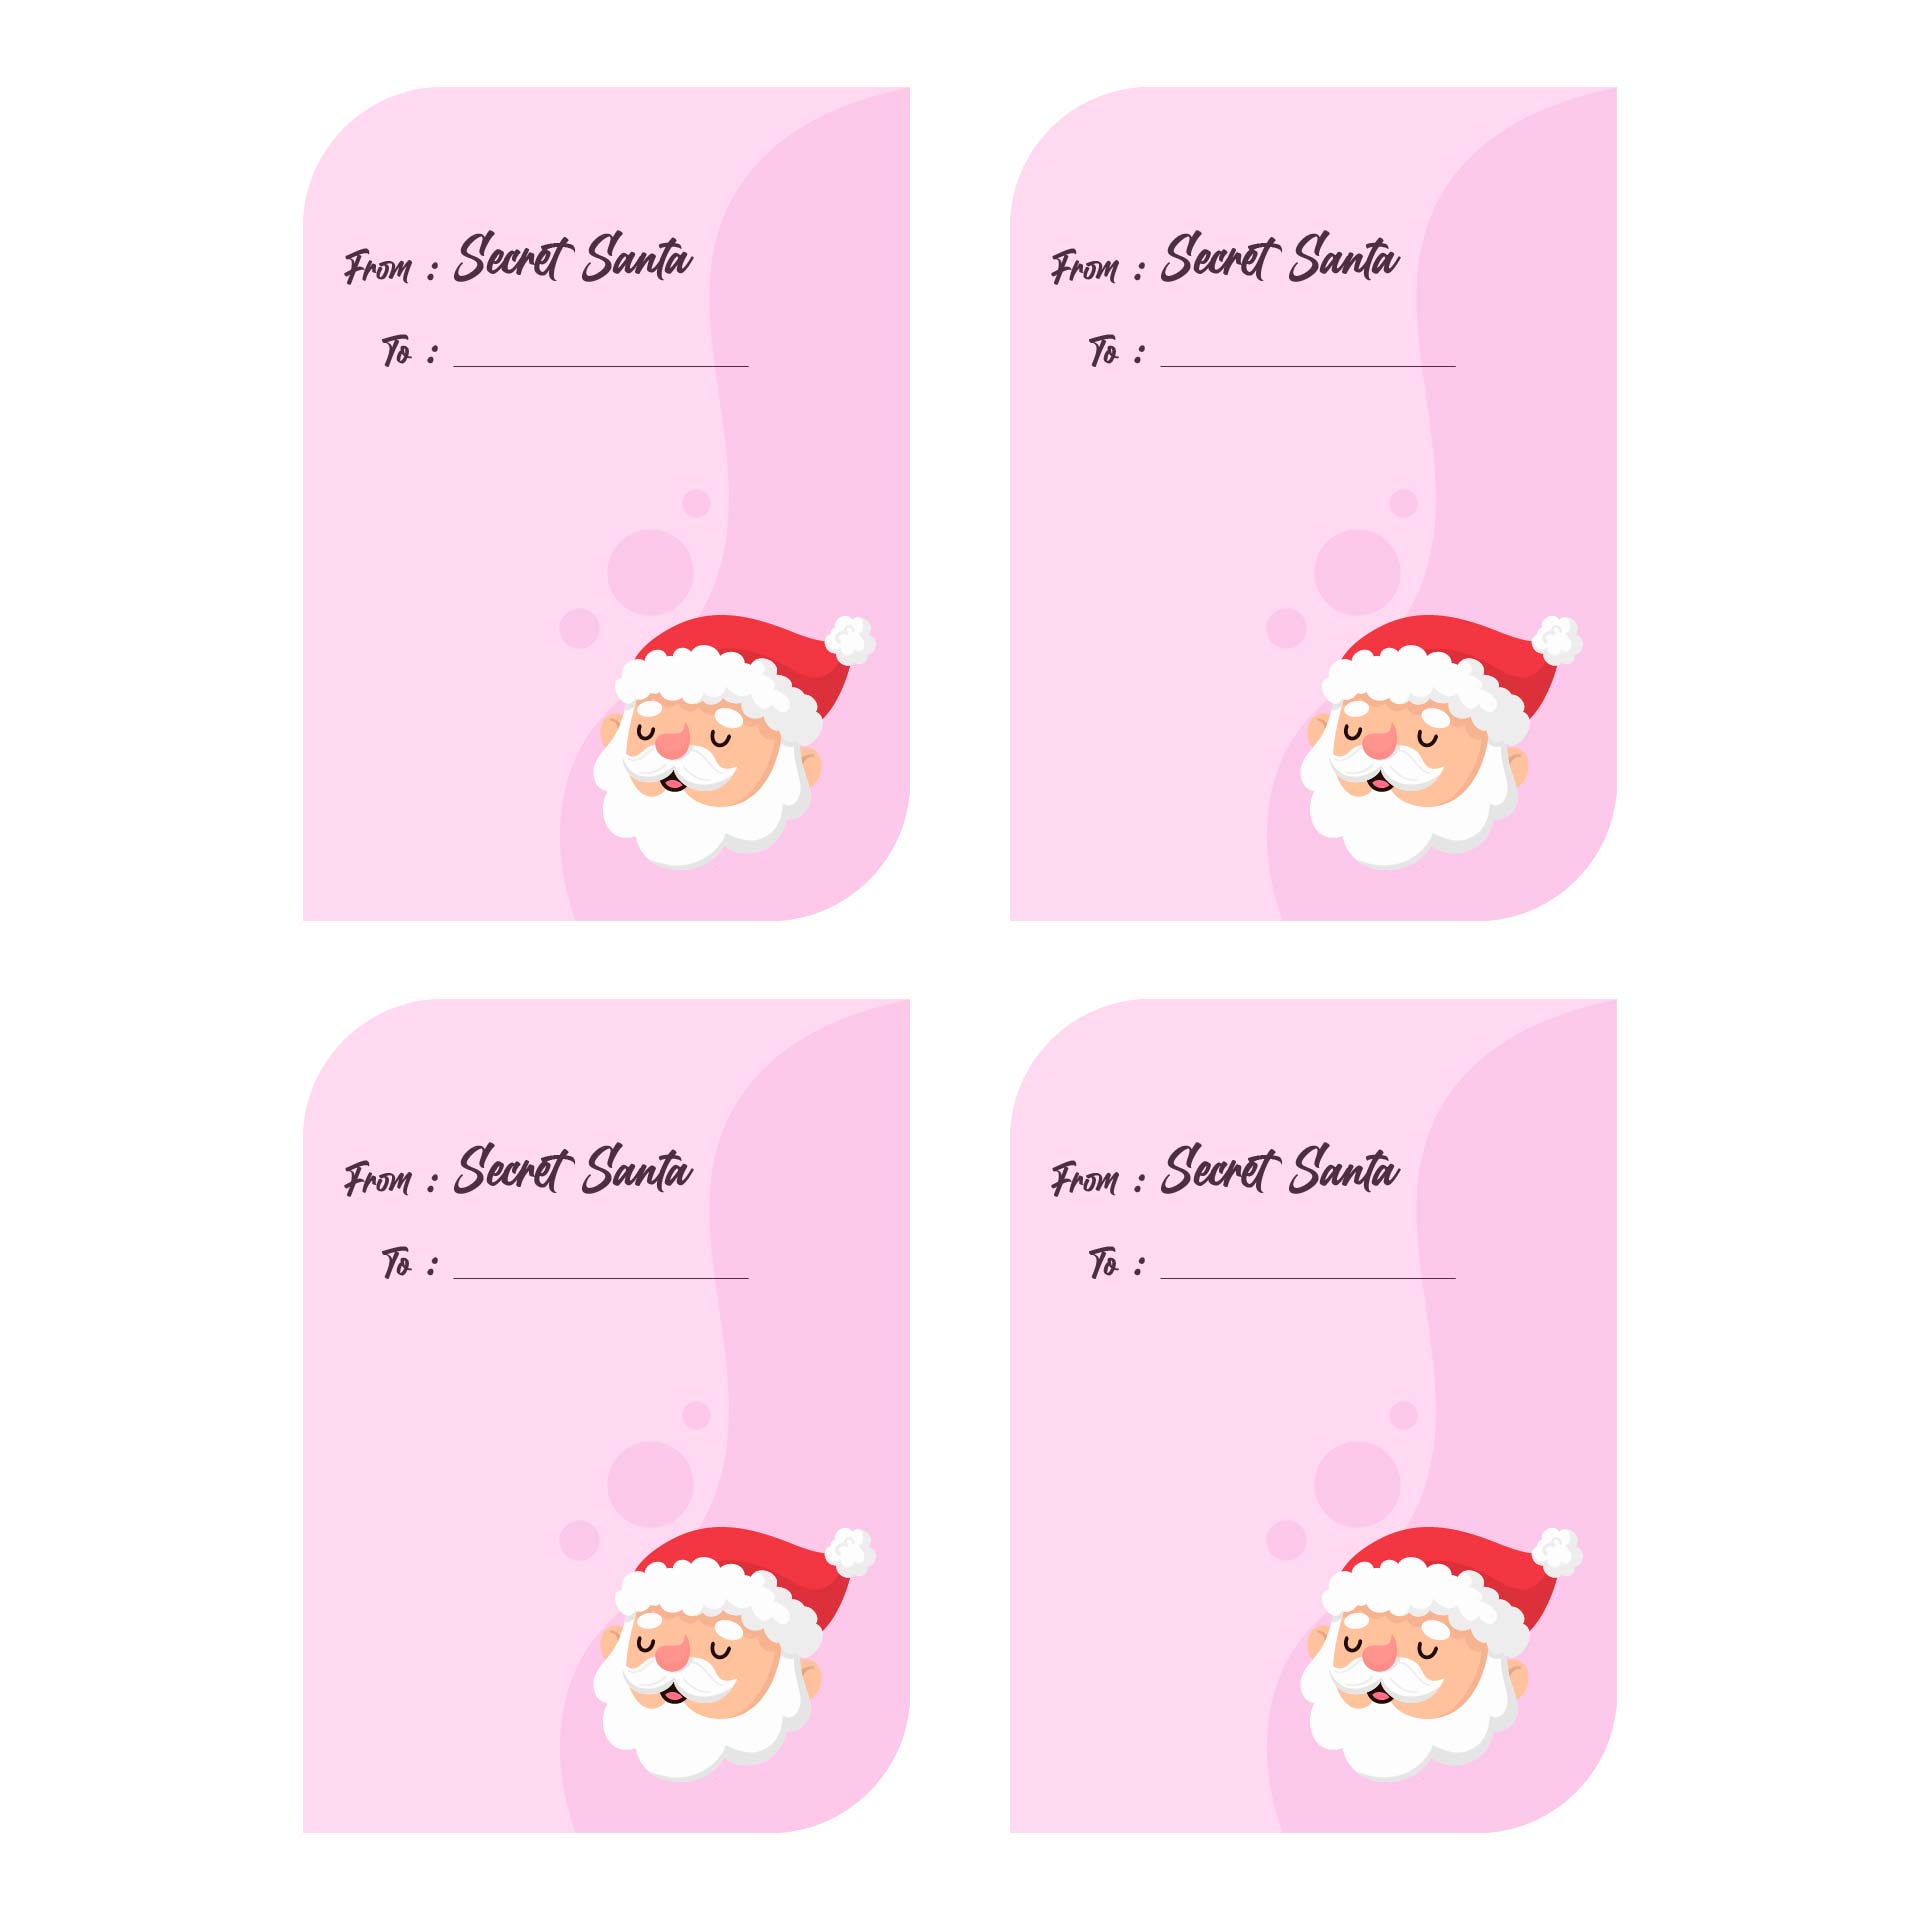 Printable Secret Santa Cards_200031